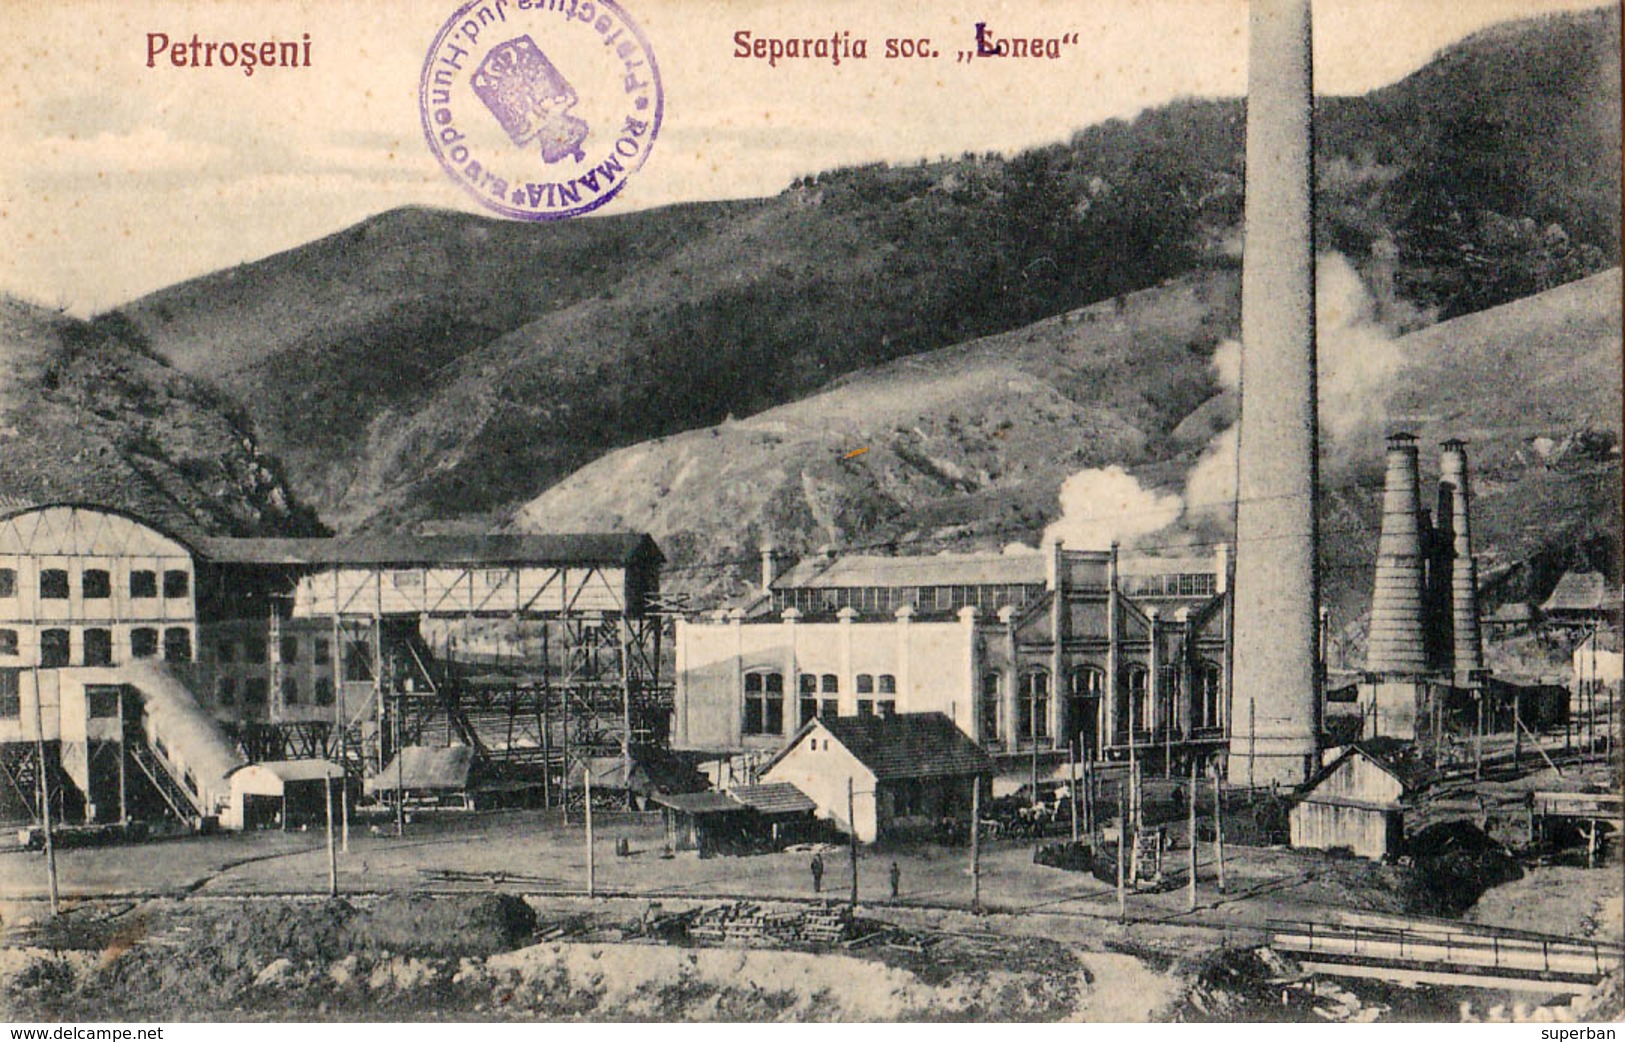 PETROSENI / PETROSANI : SEPARATIA SOC. LONEA - MINE DE CHARBON / COAL MINE - ANNÉE / YEAR ~ 1920 - '25 - RARE ! (v-693) - Roumanie